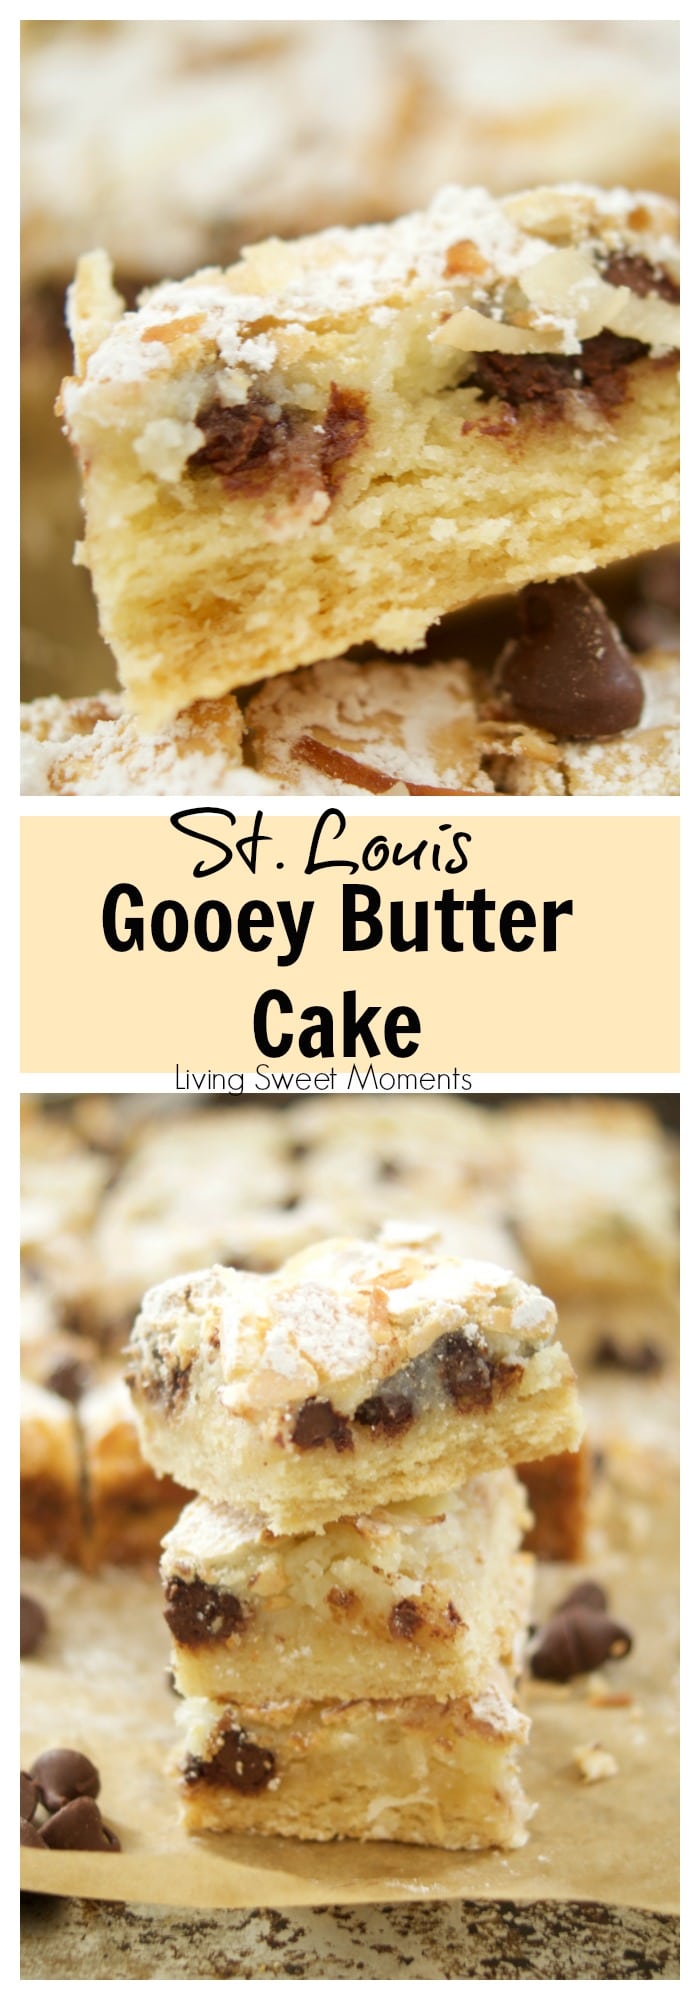 St. Louis Gooey Butter Cake Recipe - Living Sweet Moments